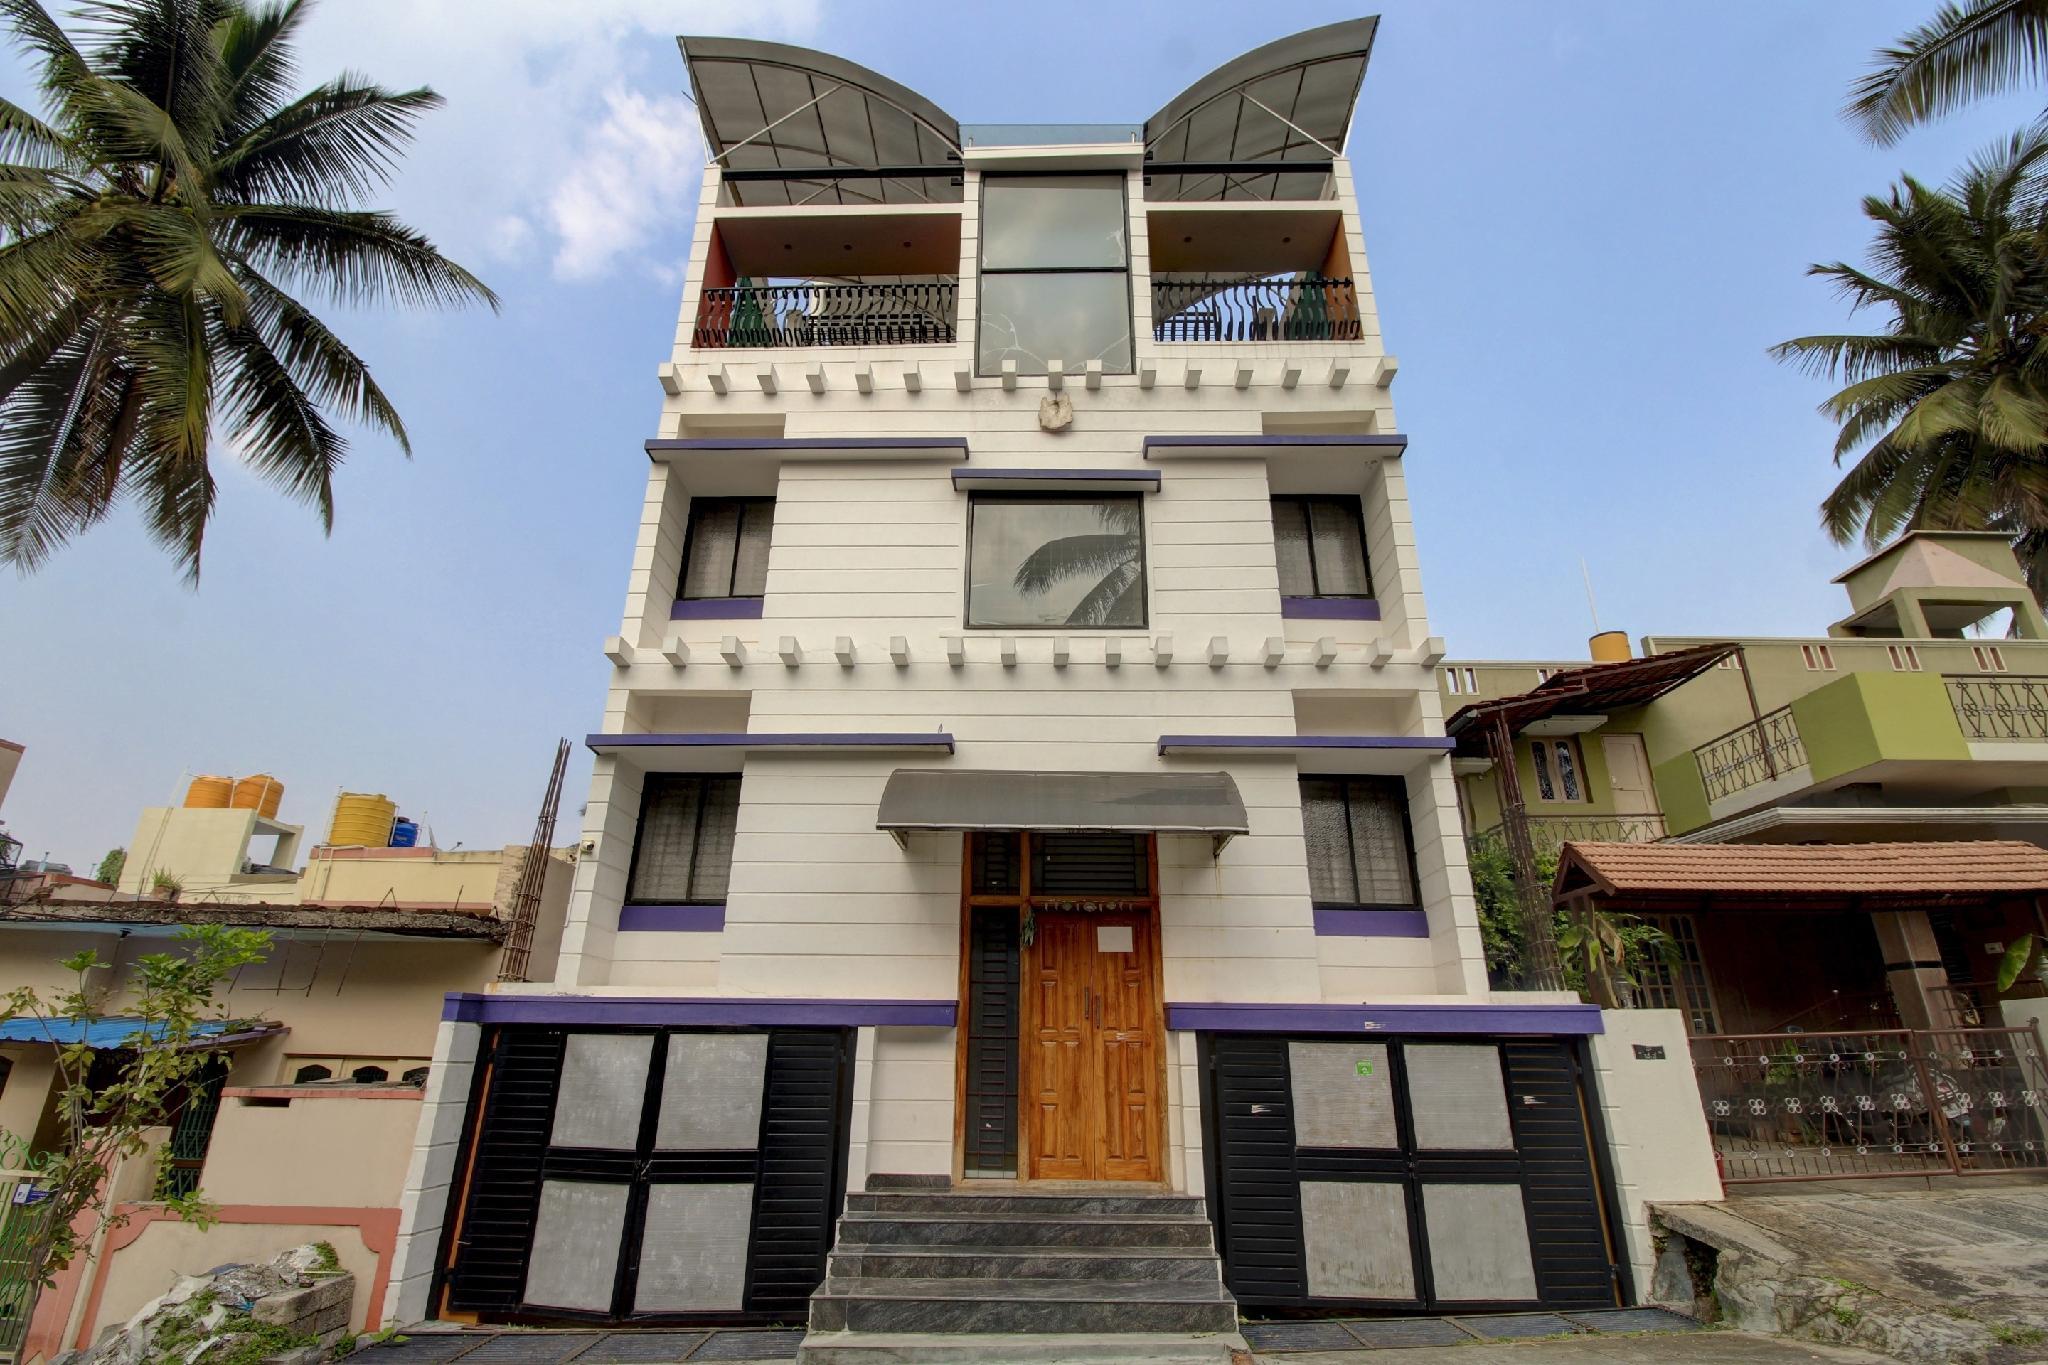 Oyo Home 80001 Vp Inn - Mysore